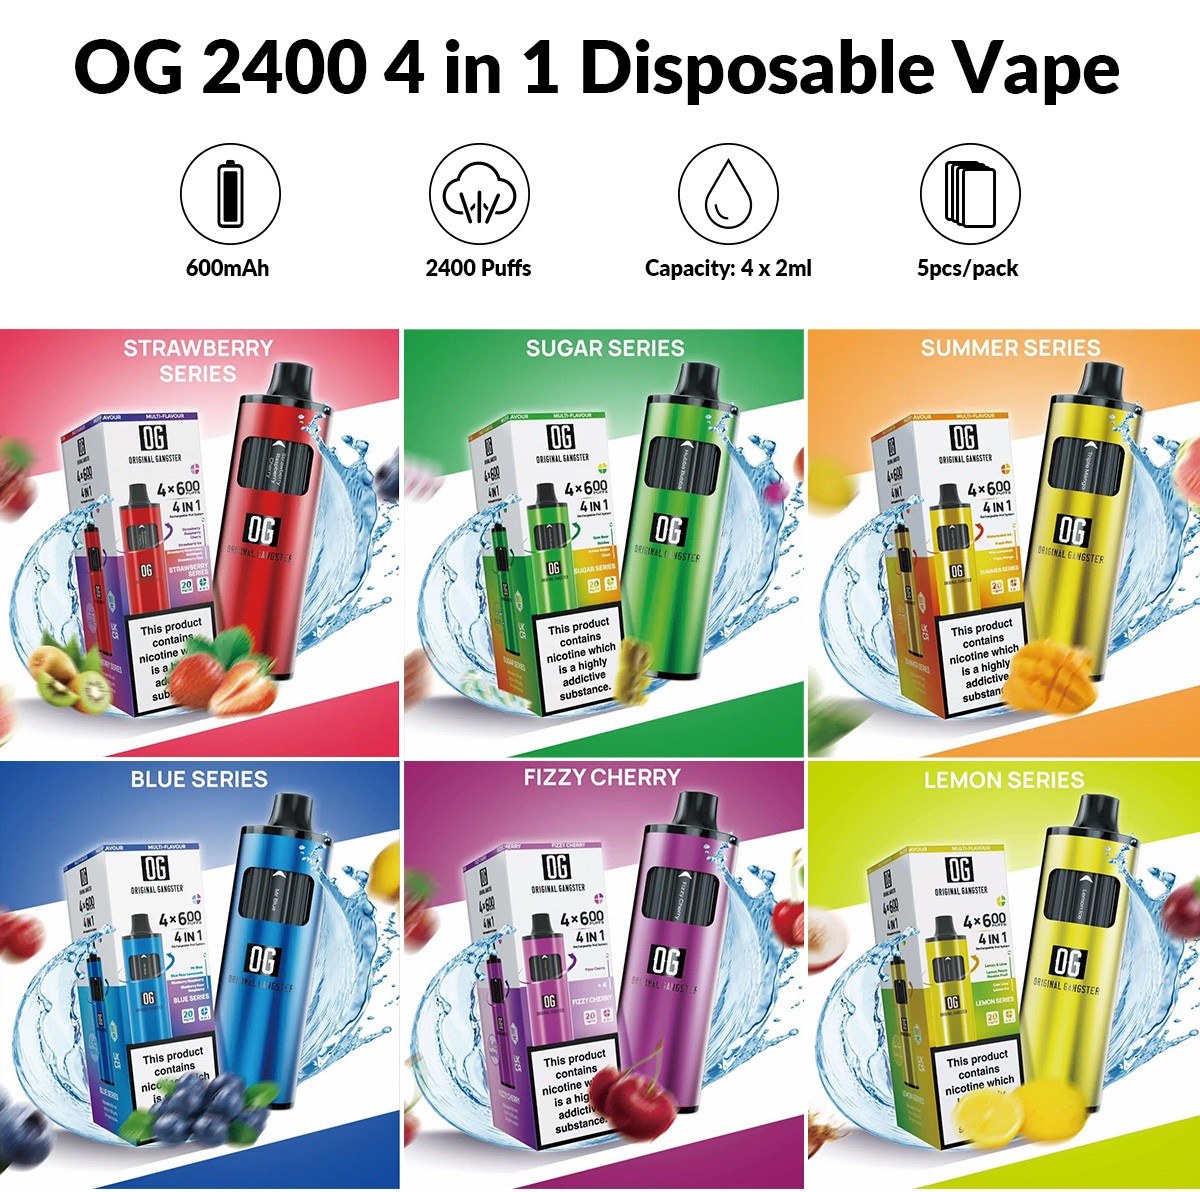 OG 2400 4 in 1 Disposable